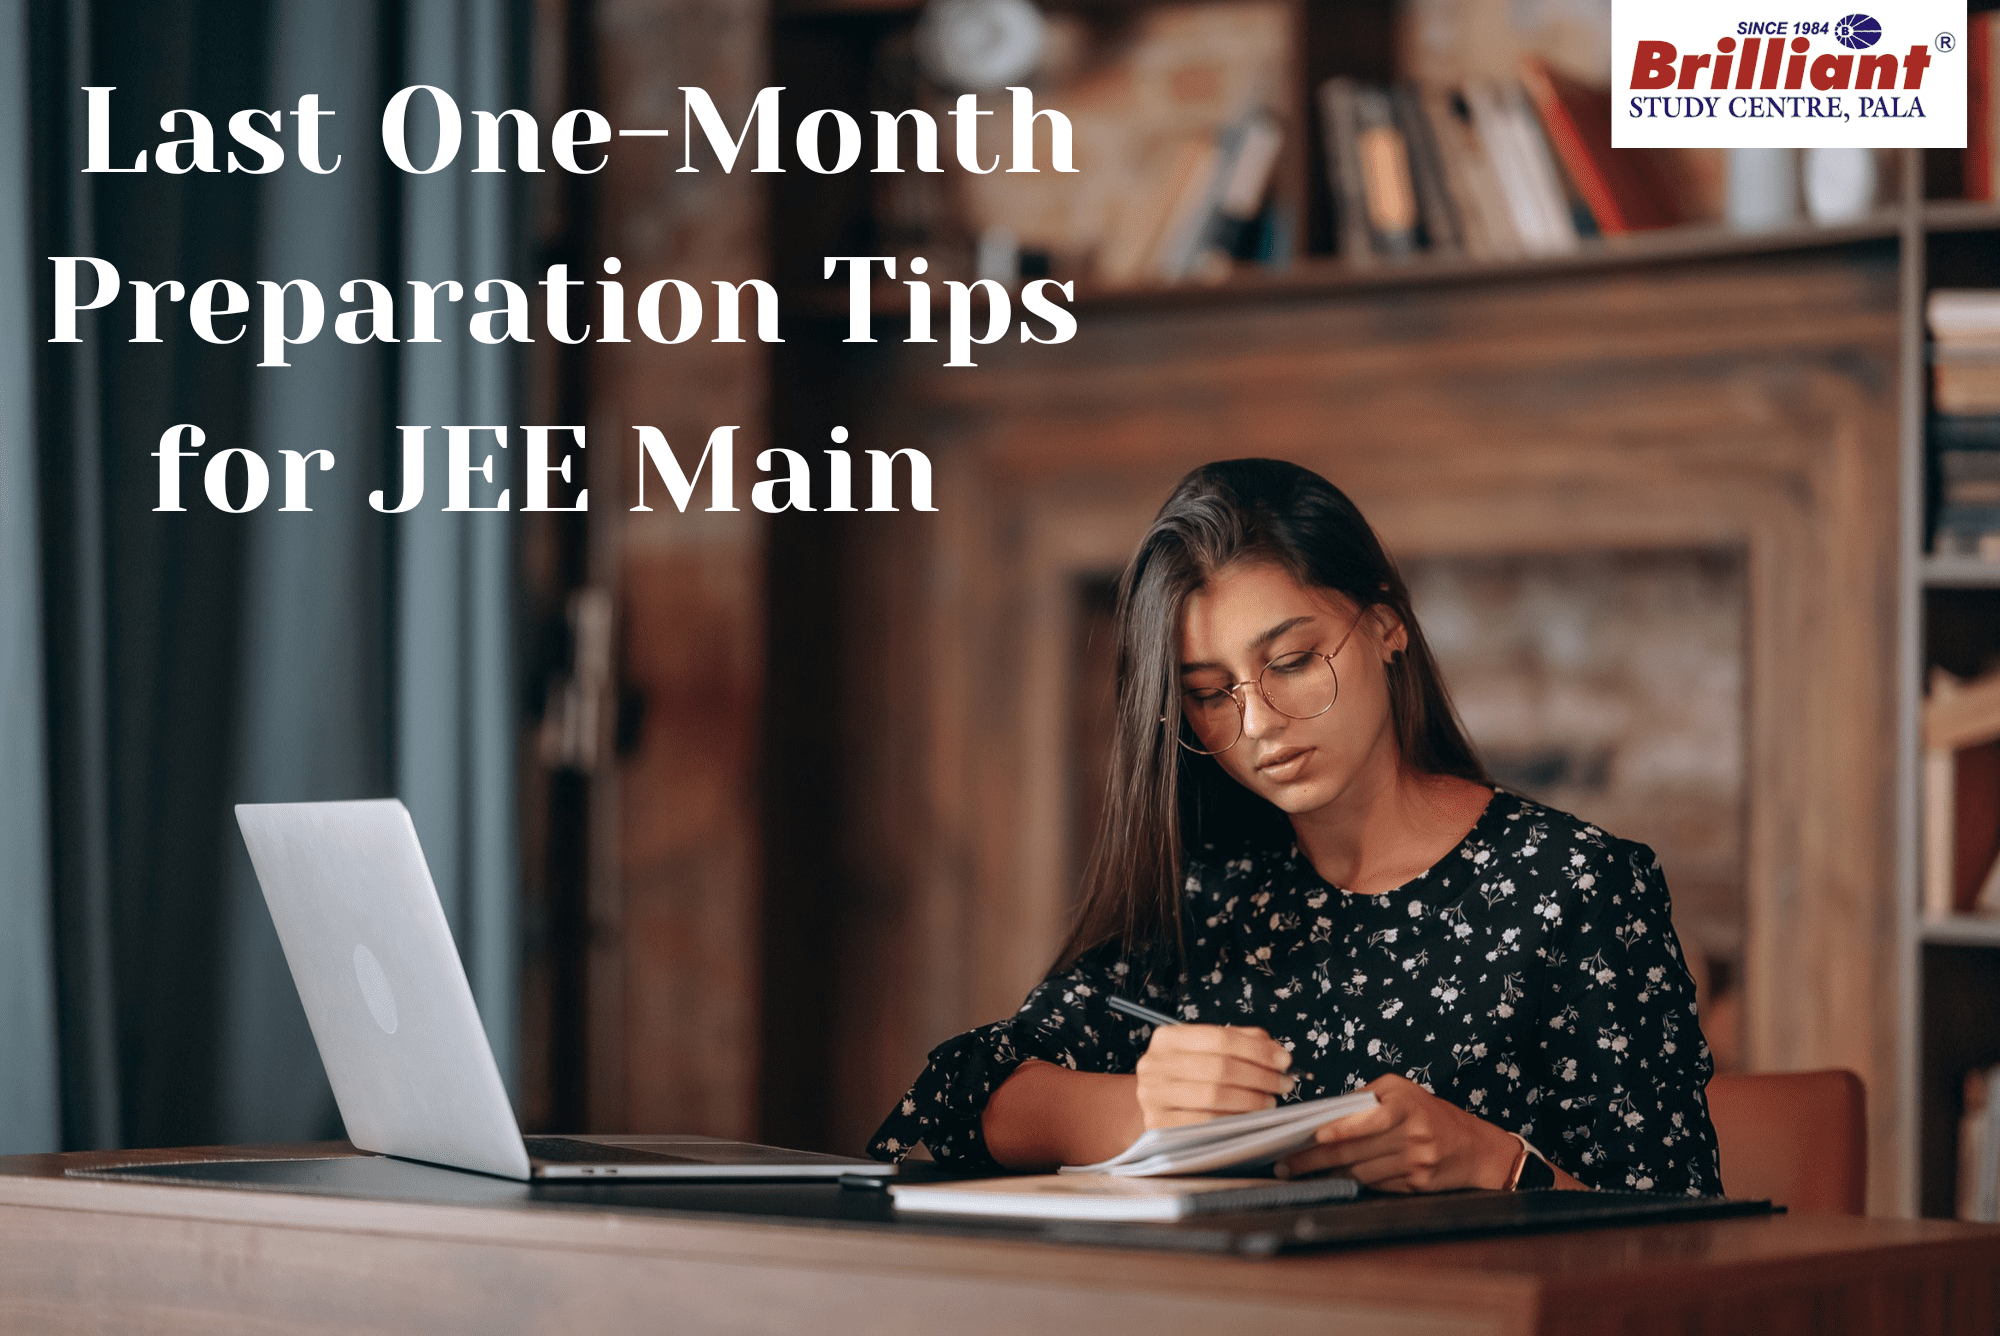 jee preparation tips